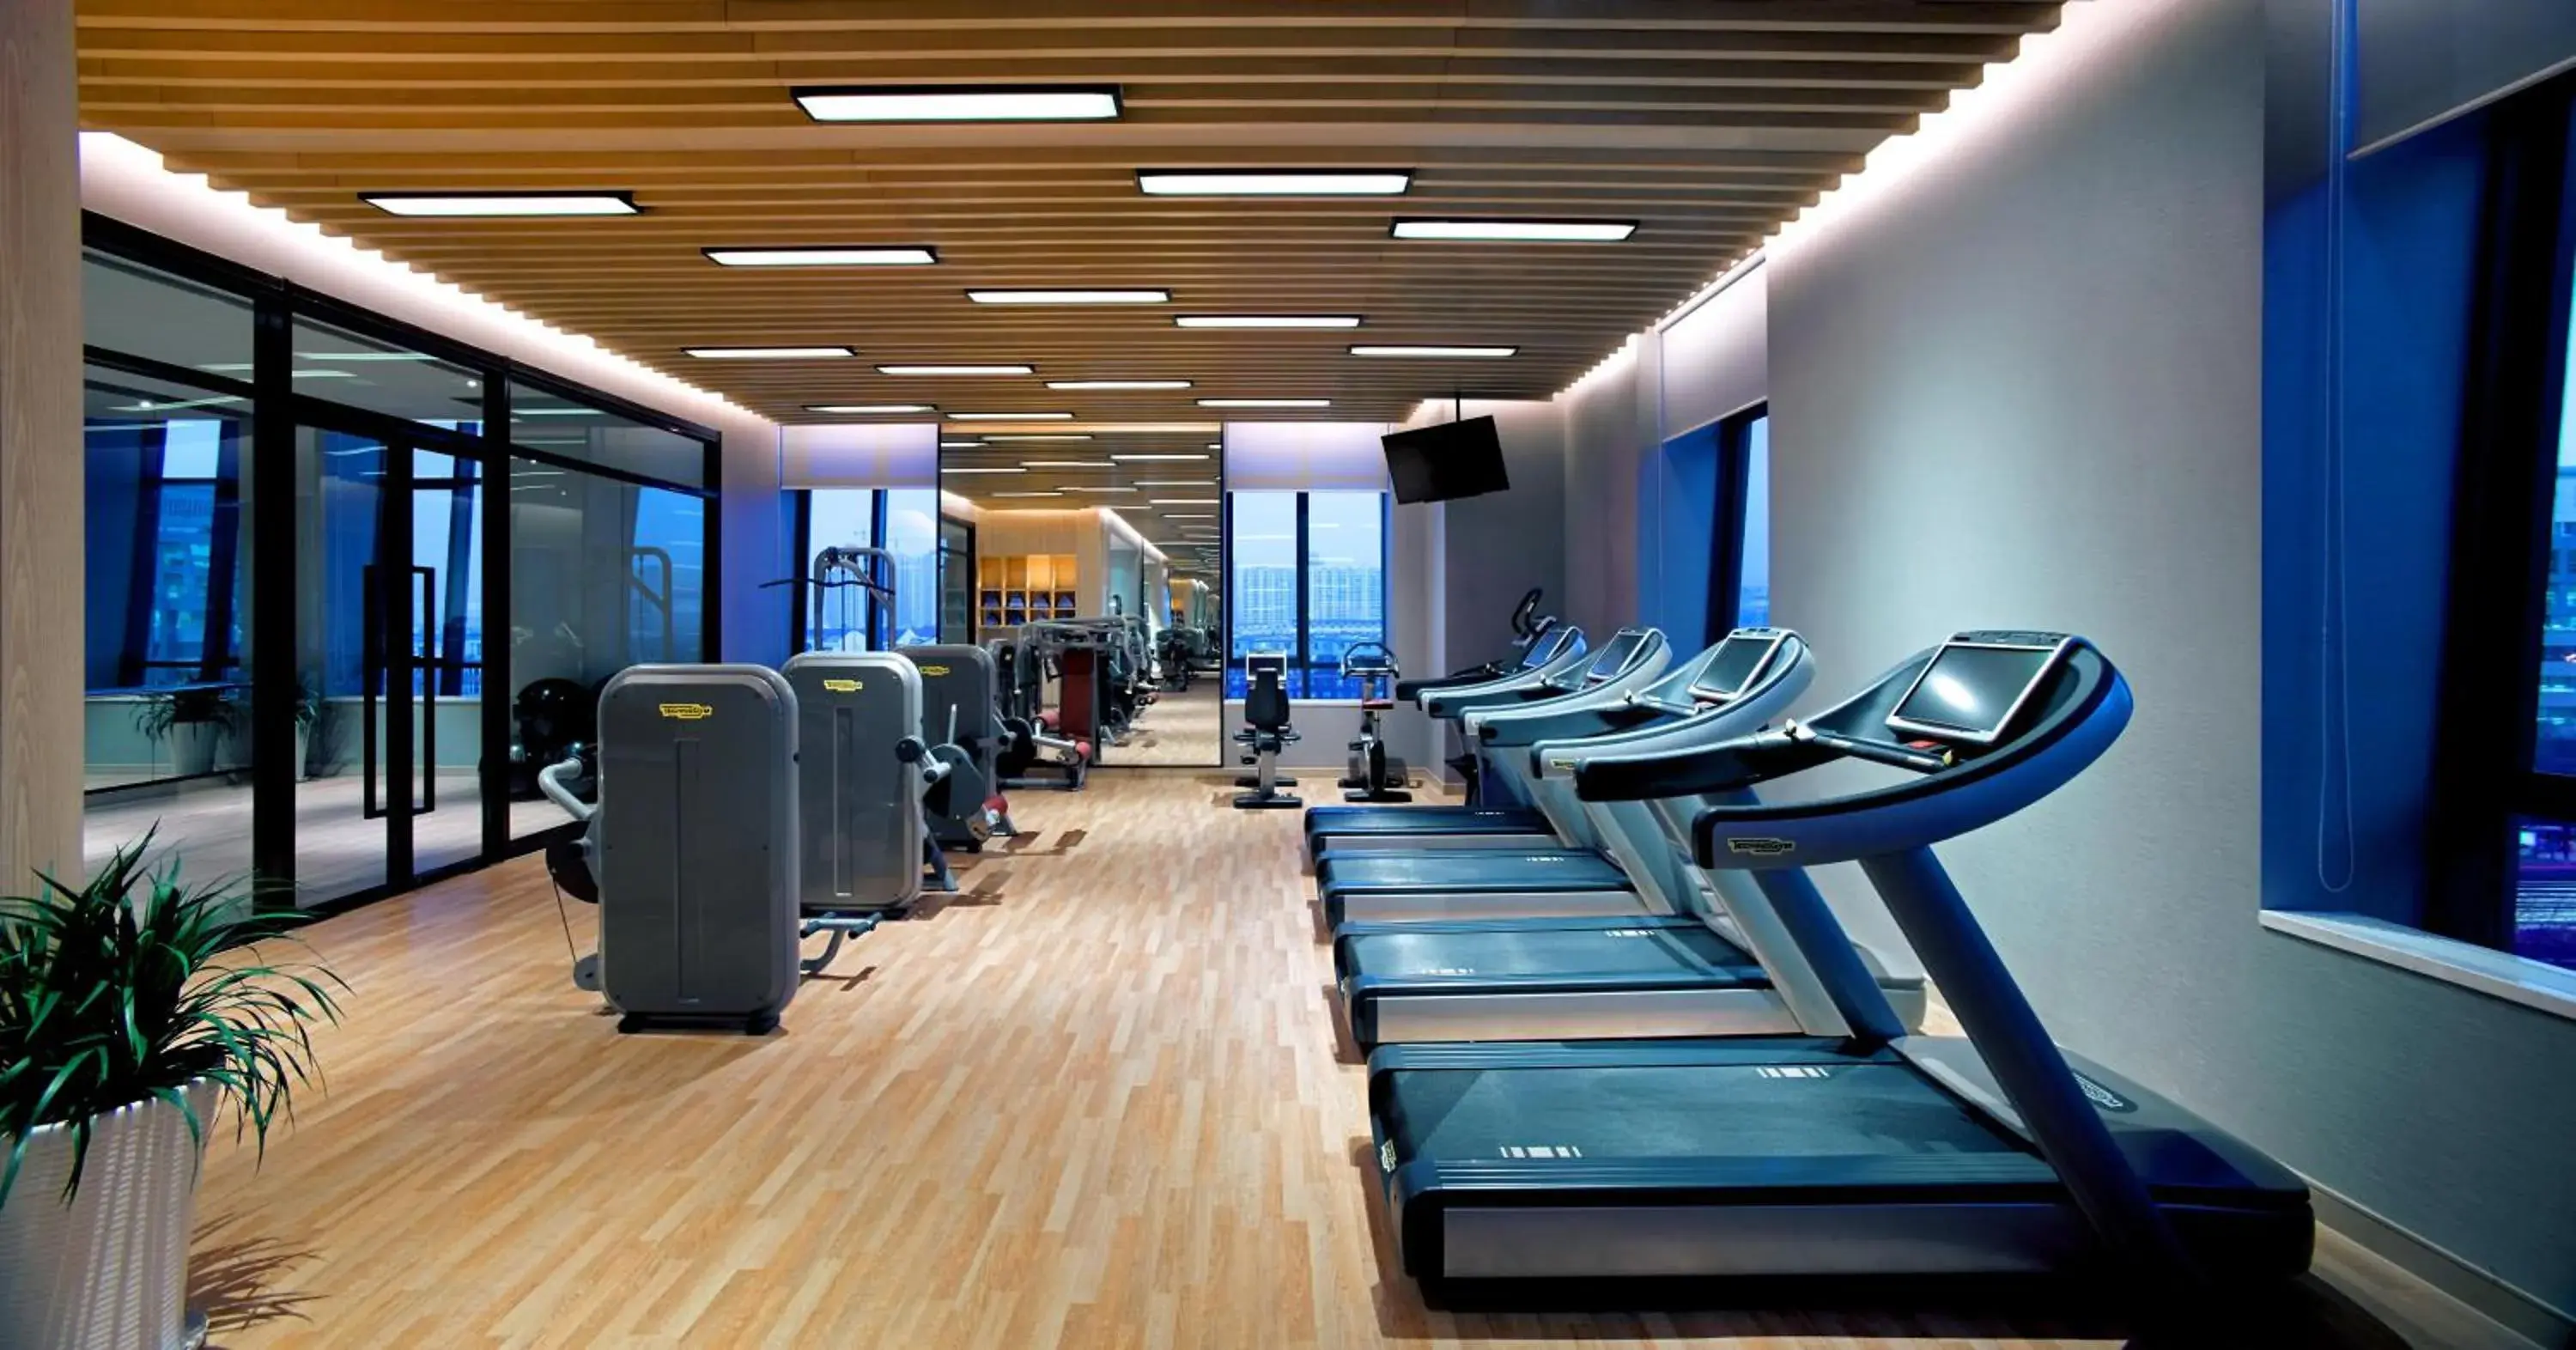 Fitness centre/facilities, Fitness Center/Facilities in Wanda Vista Hohhot